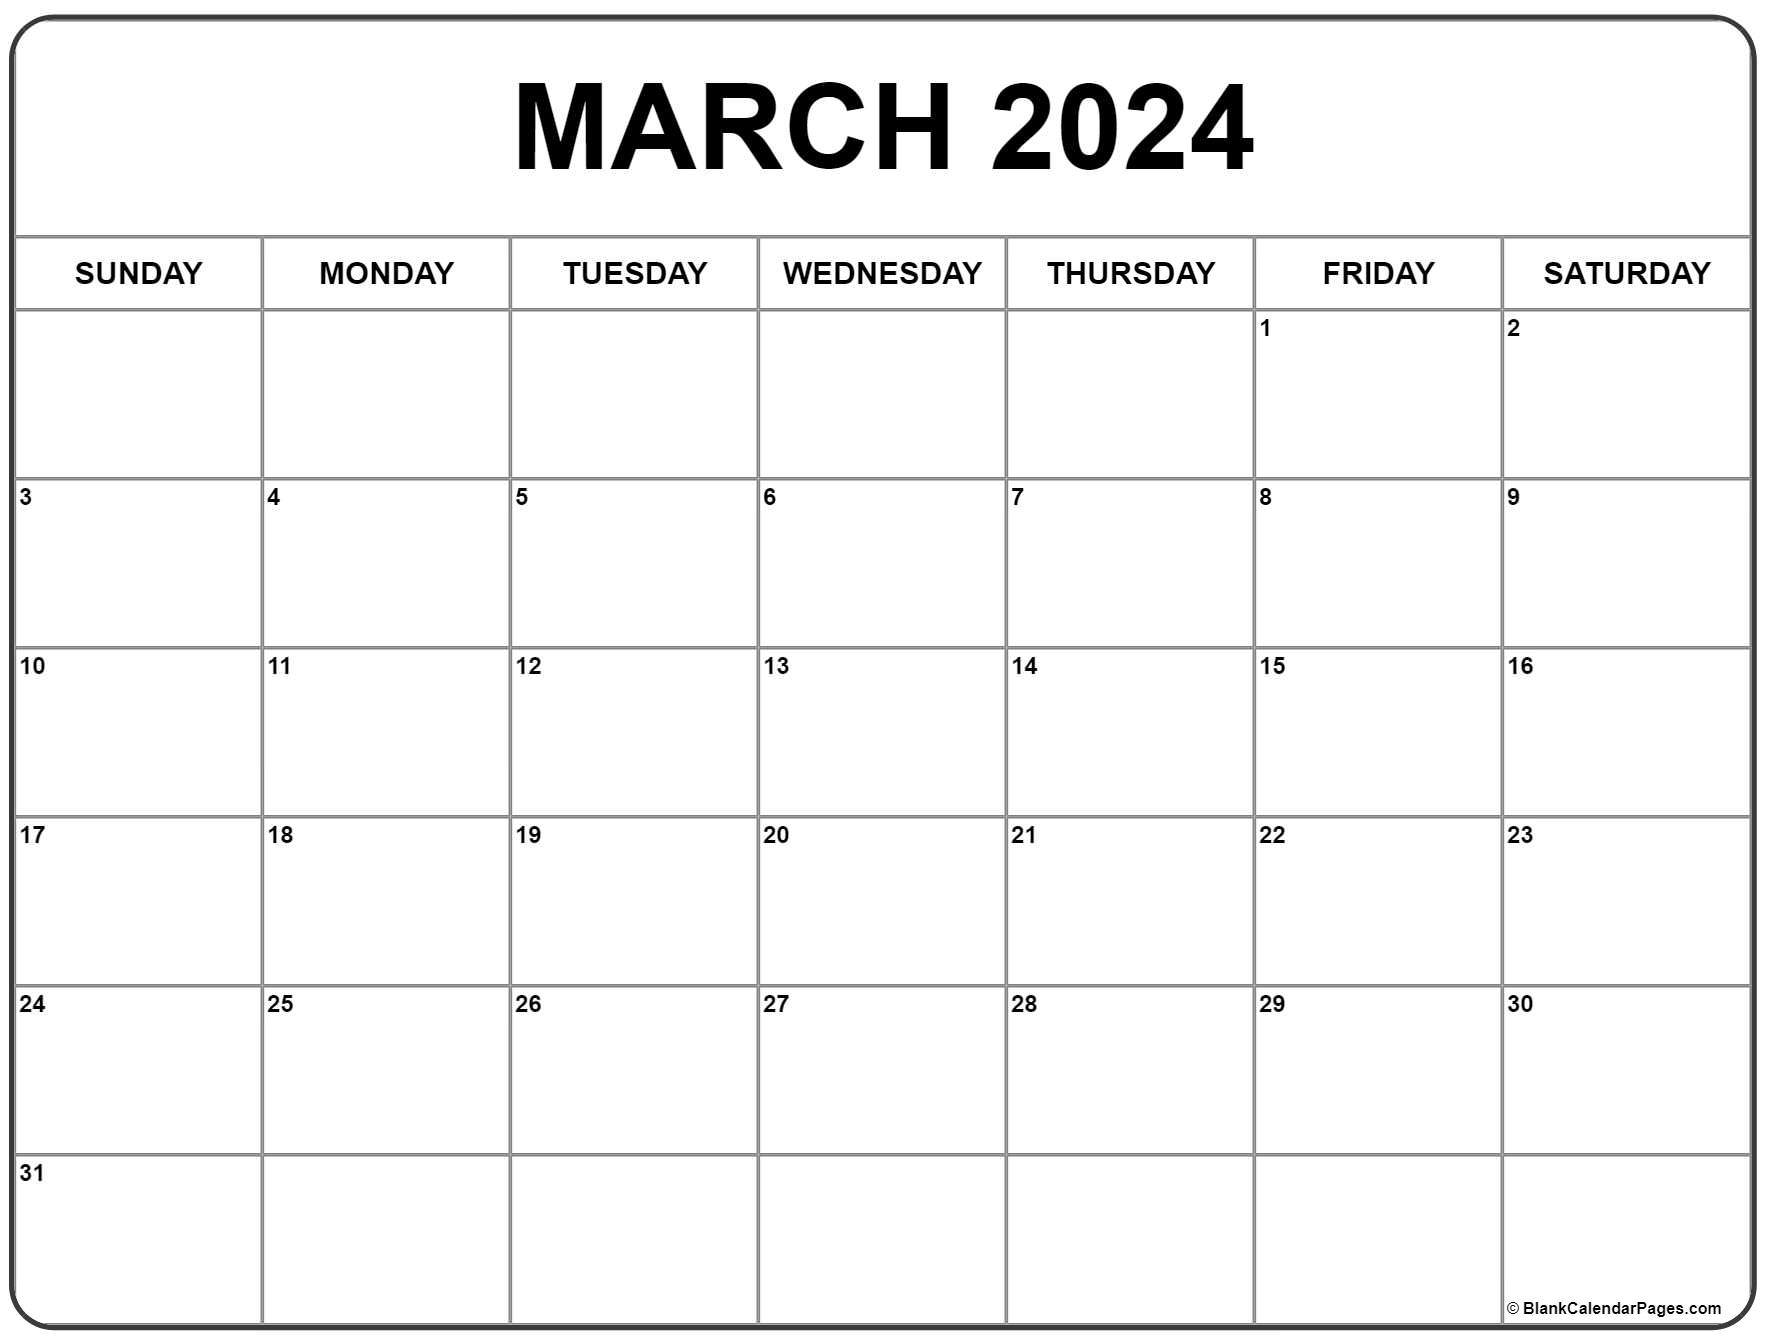 March 2024 Calendar | Free Printable Calendar for Free Calendar Printable March 2024